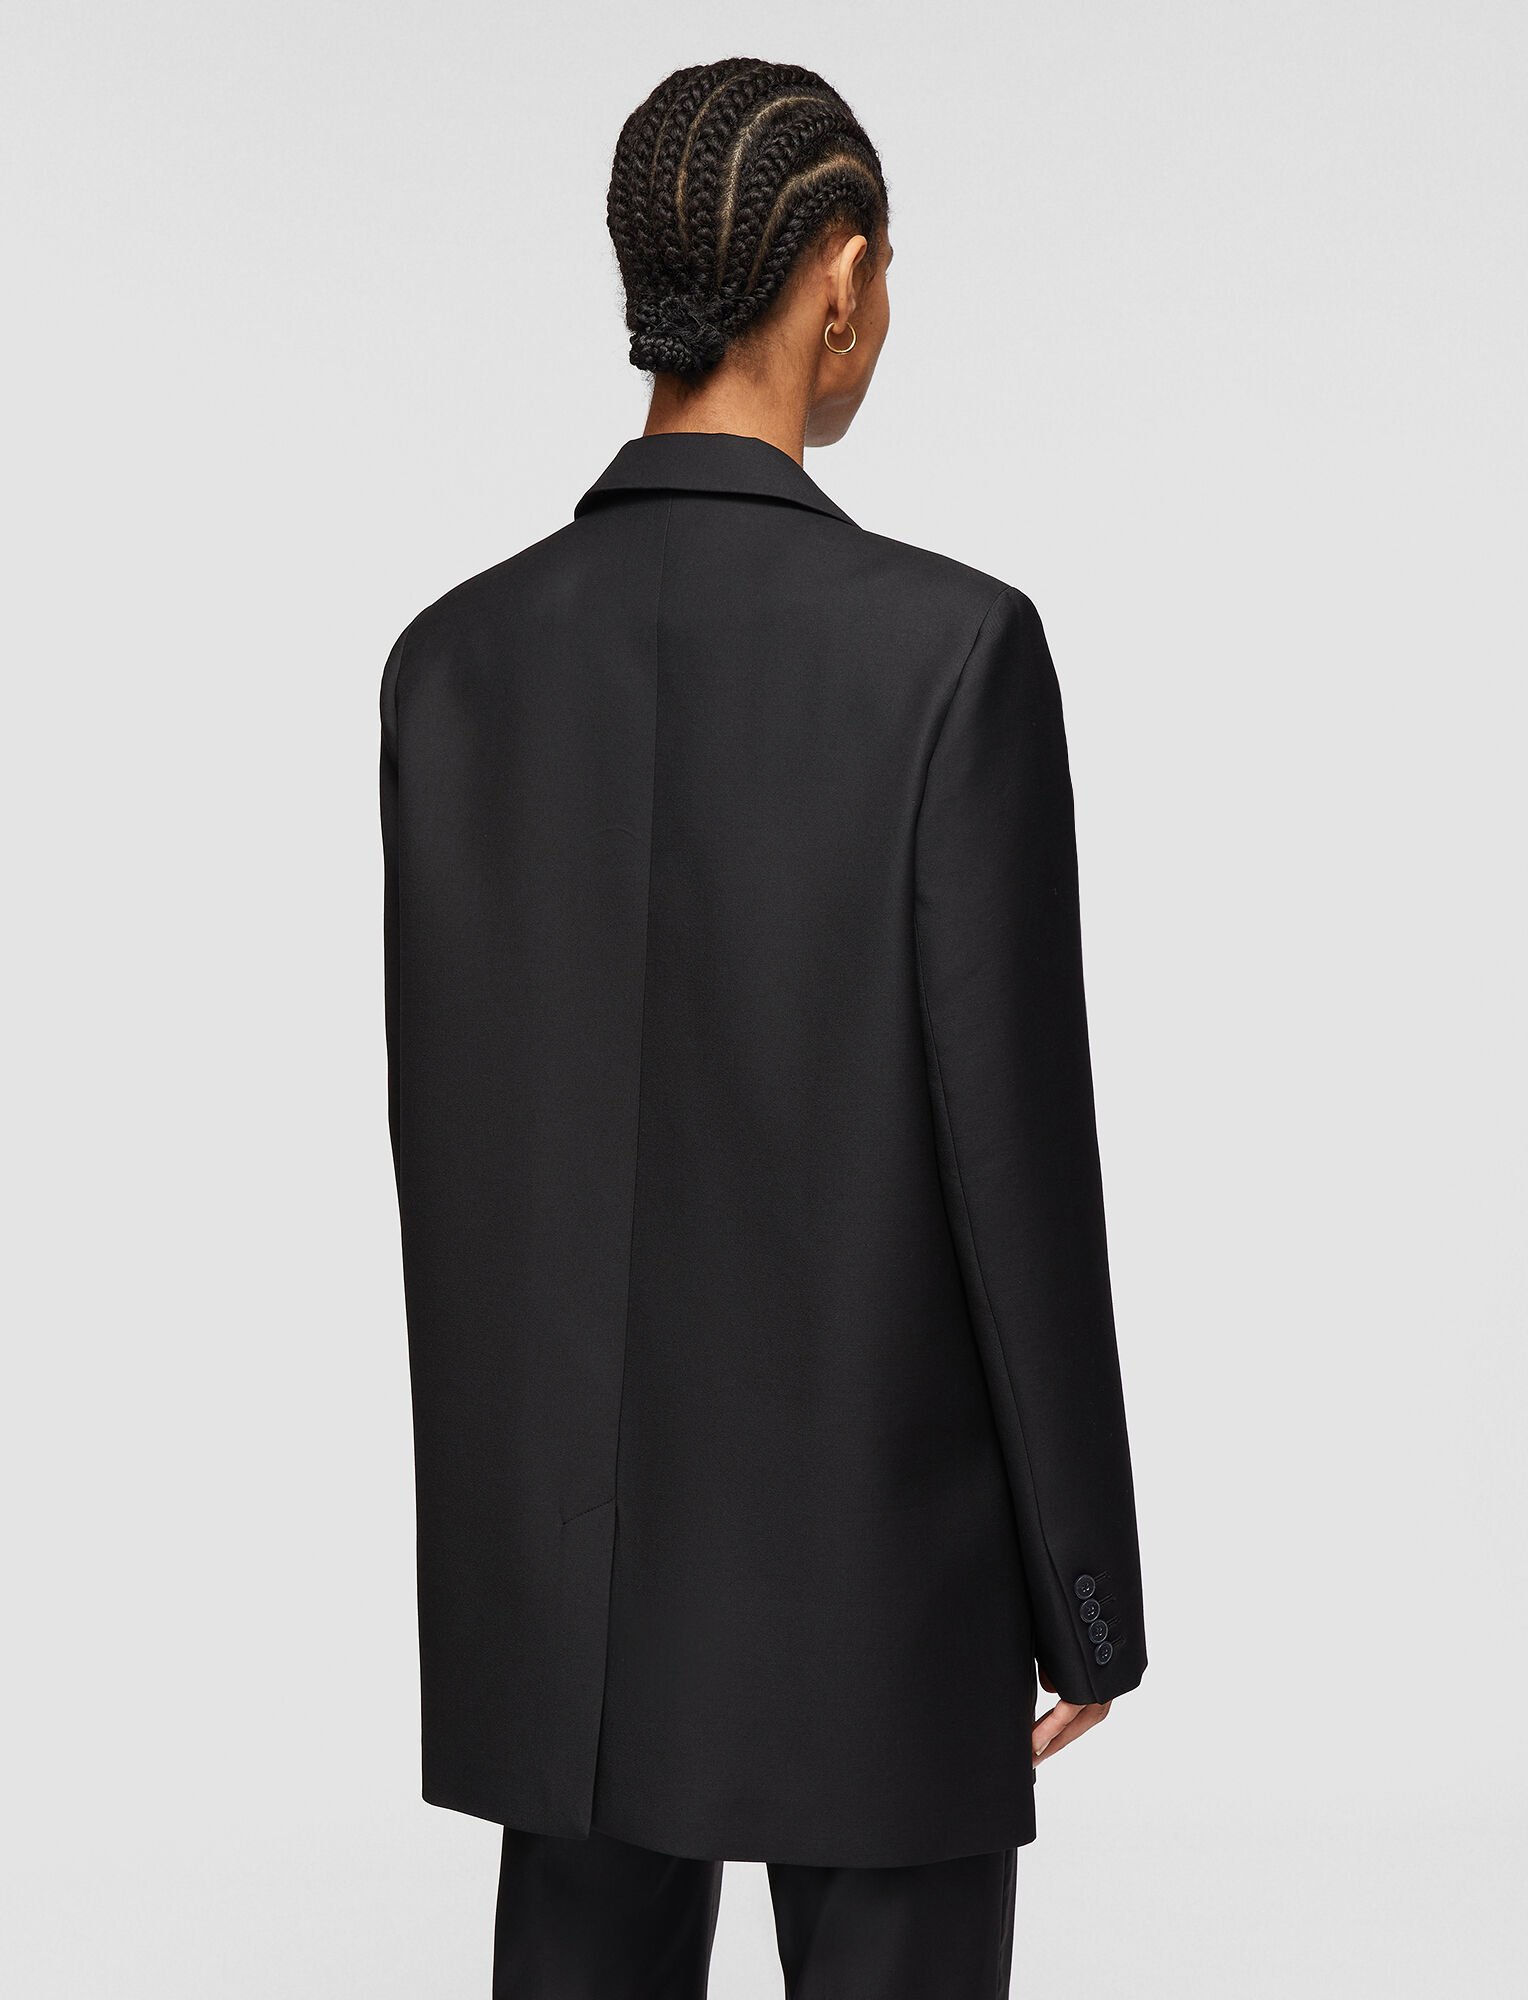 Joseph, Tailoring Wool Joni Jacket, in BLACK